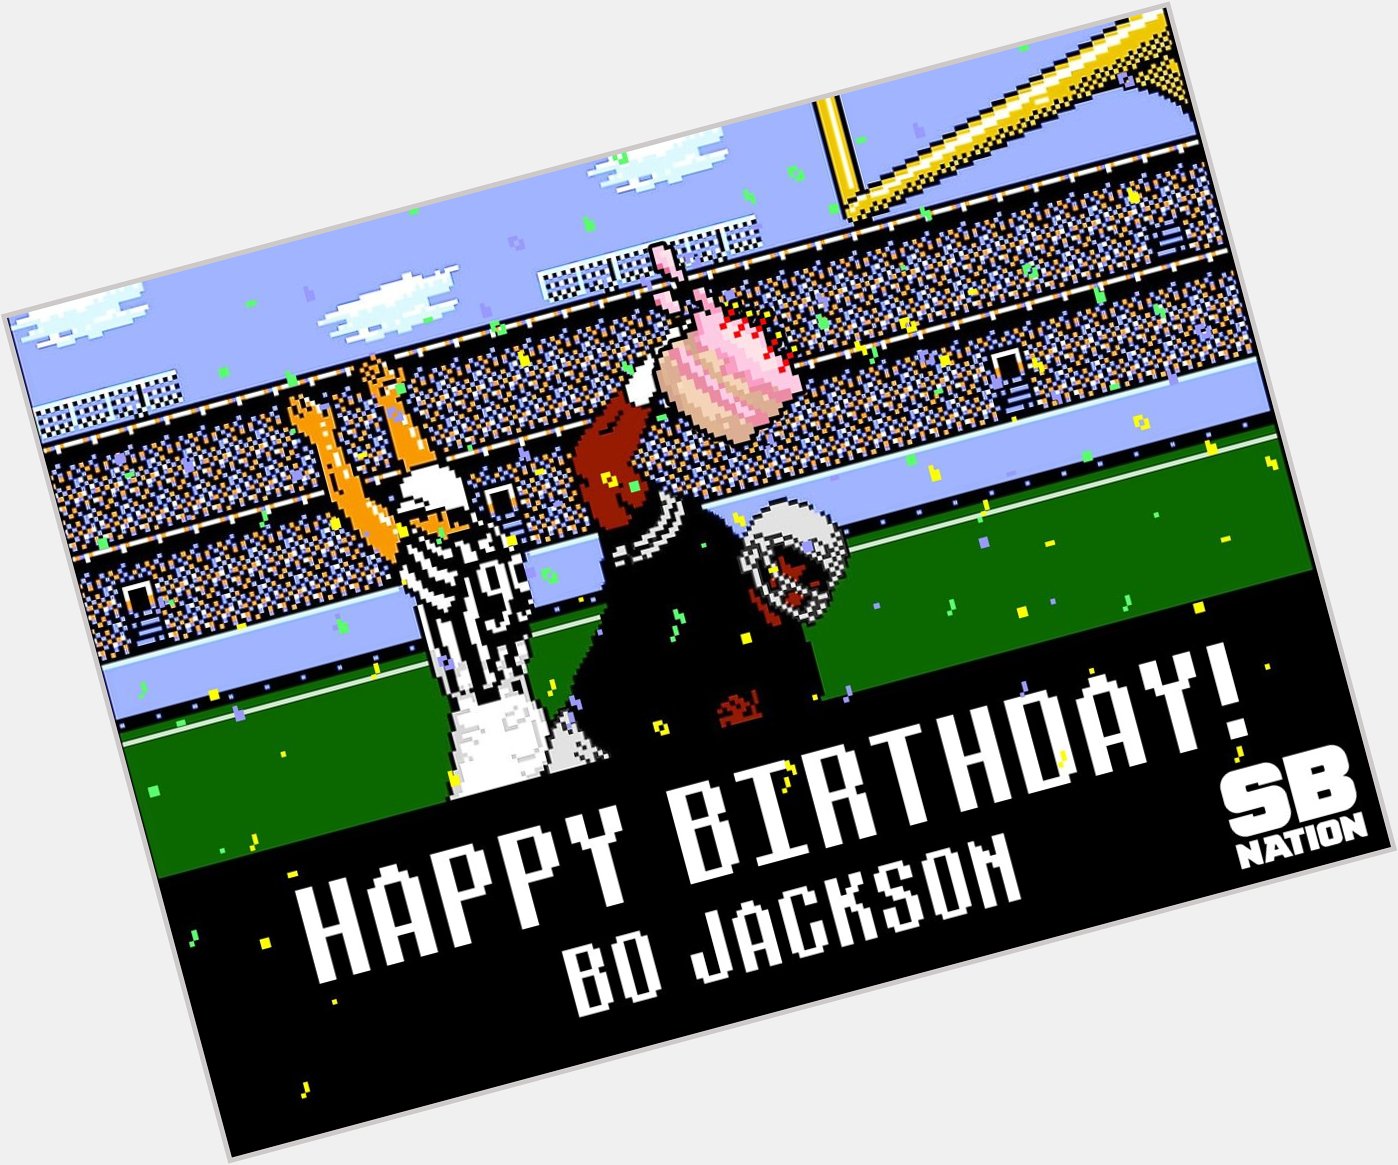 Happy 55th birthday, Bo Jackson!

[cue Tecmo Bowl touchdown music] 